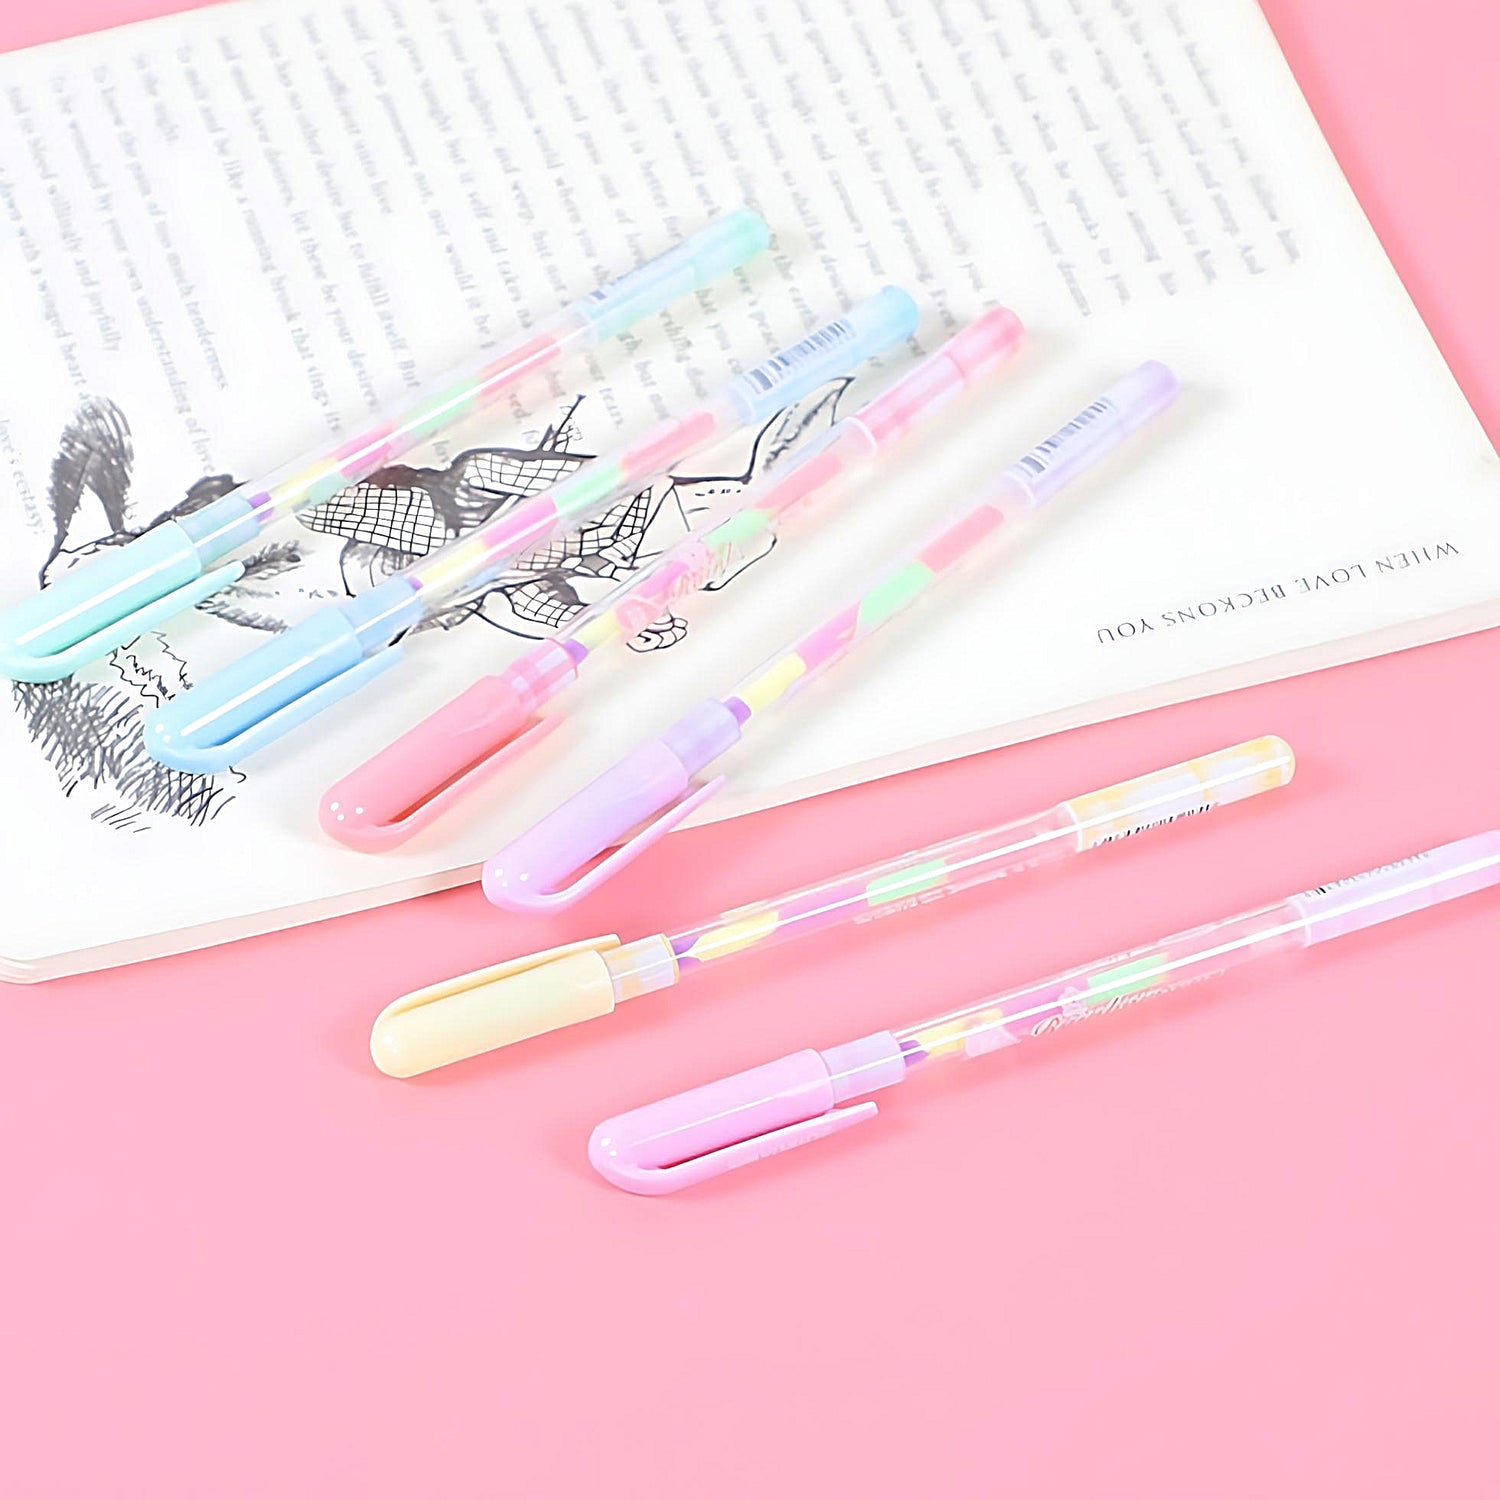 Zuixua Rainbow Gel Pen Set, Unique Stationery